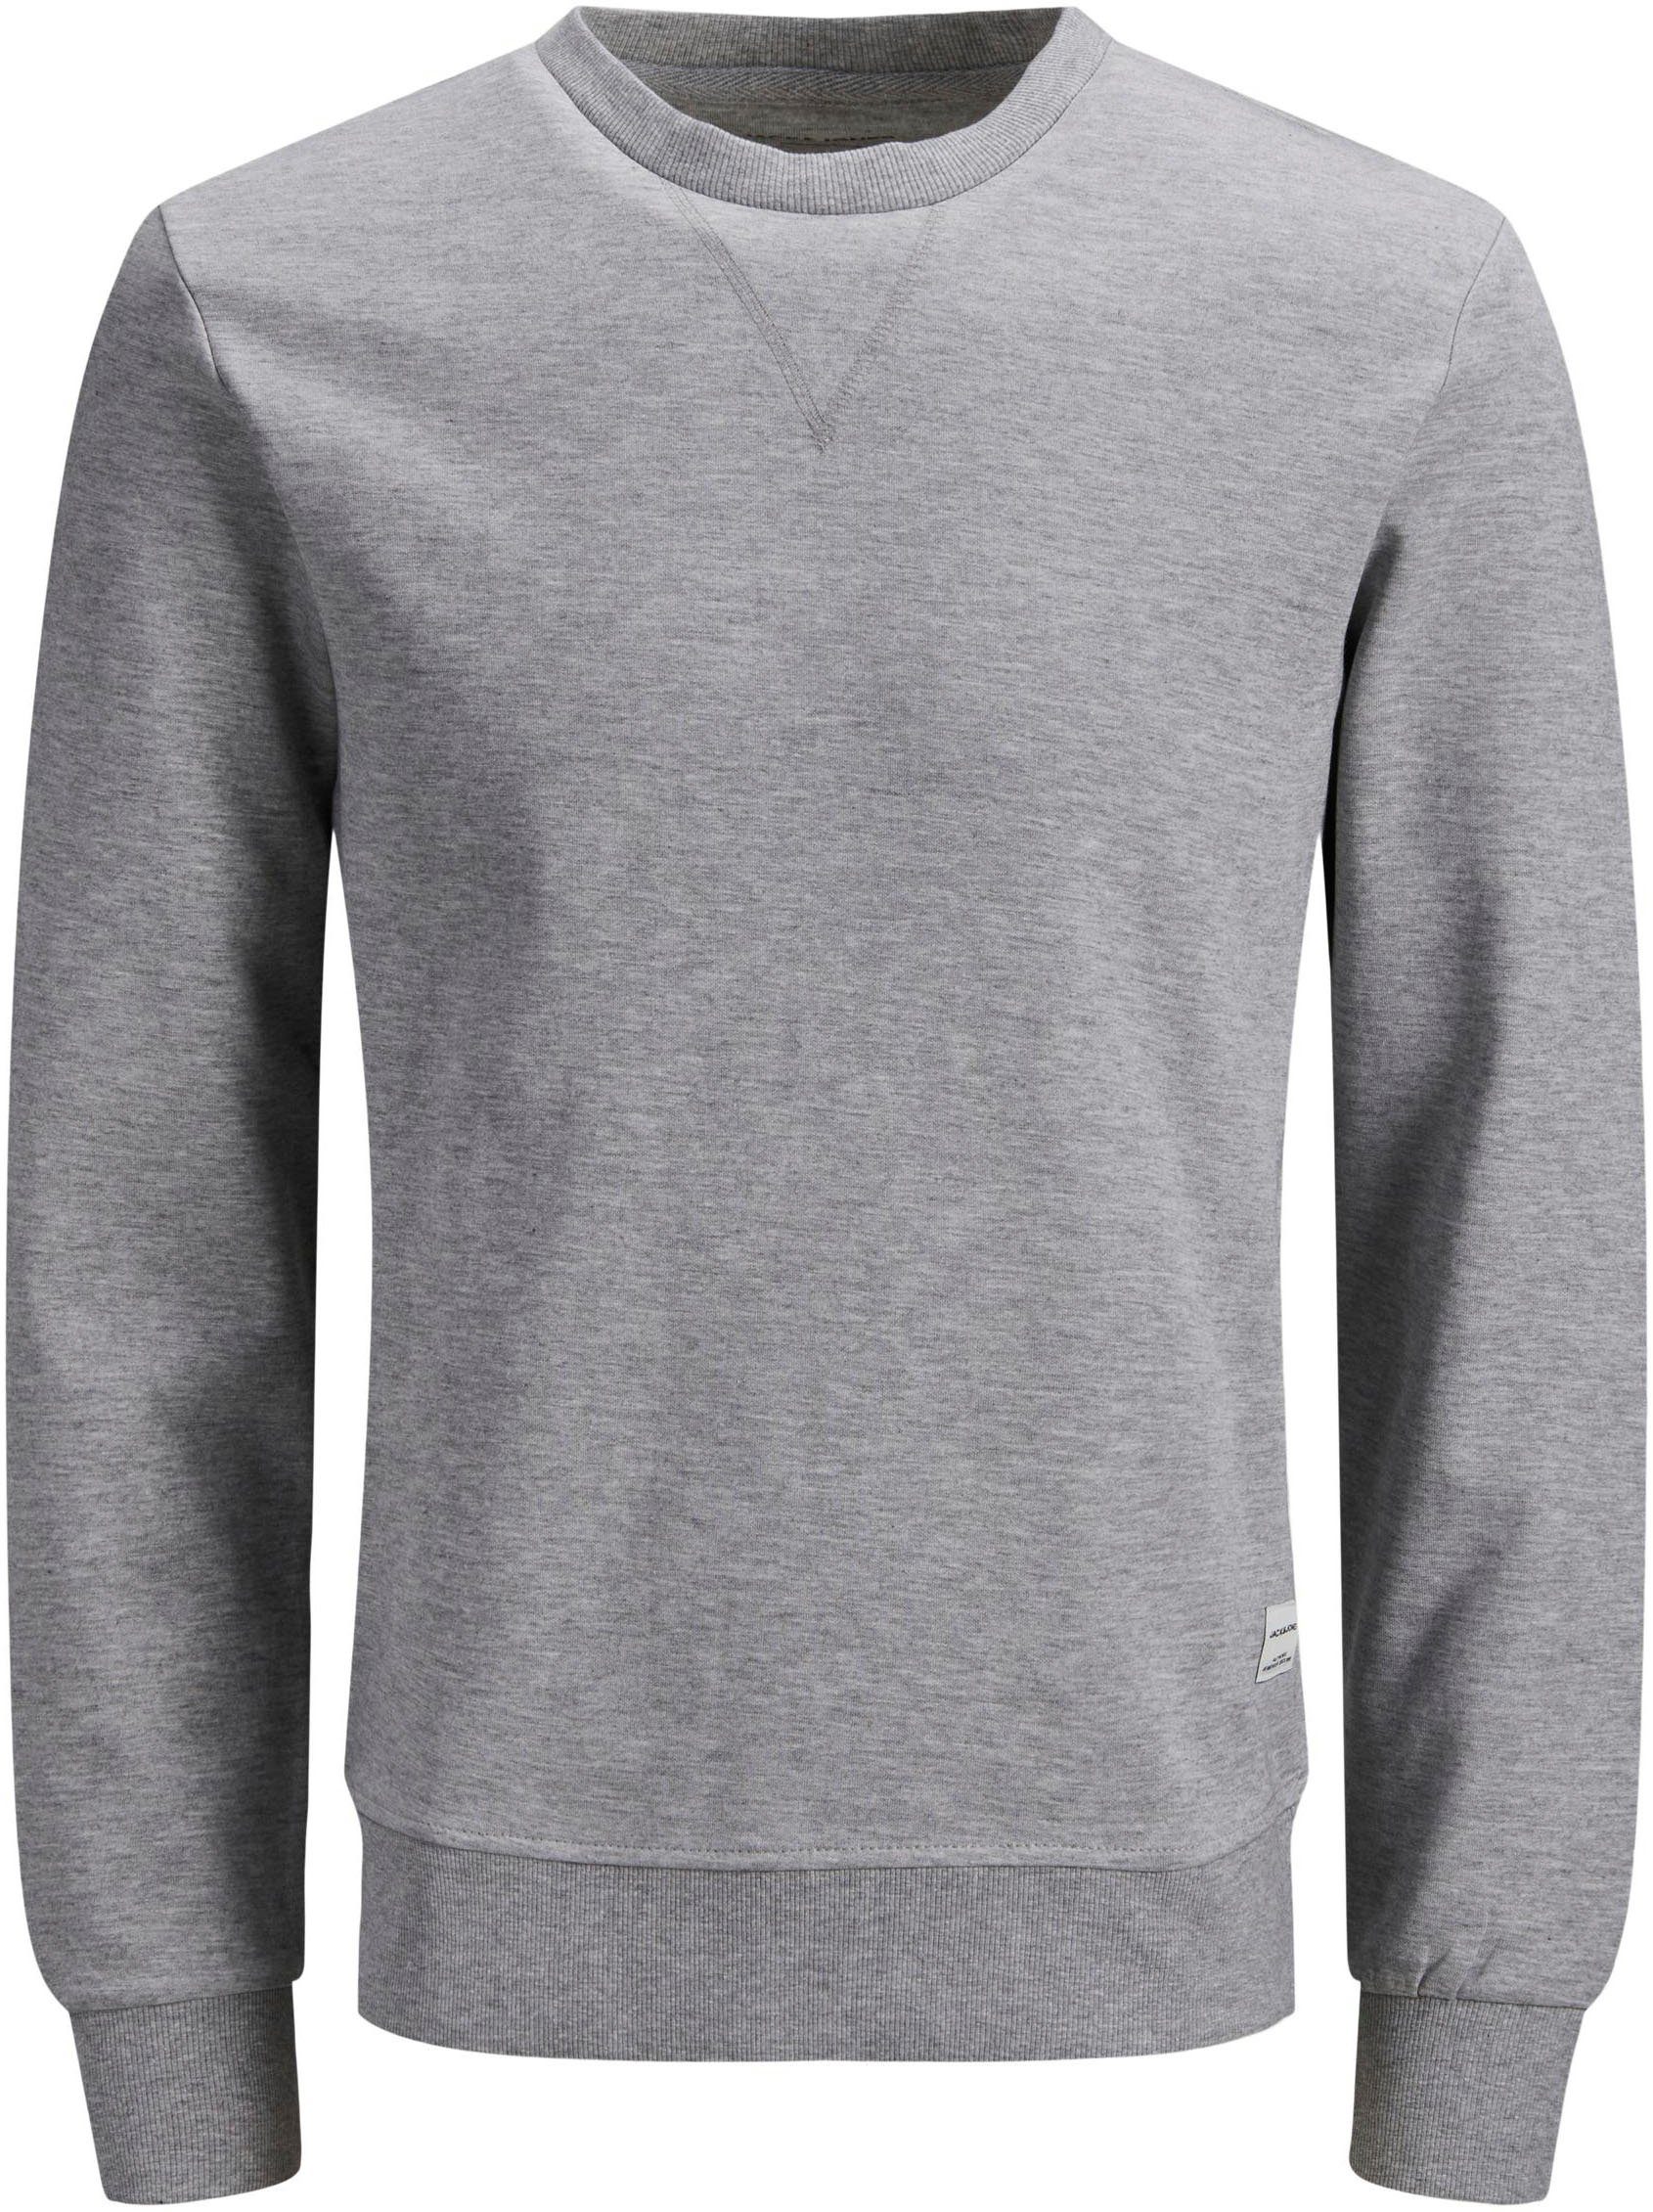 BASIC (Packung) PlusSize CREW SWEAT Sweatshirt NECK Jones Jack & hellgrau-meliert